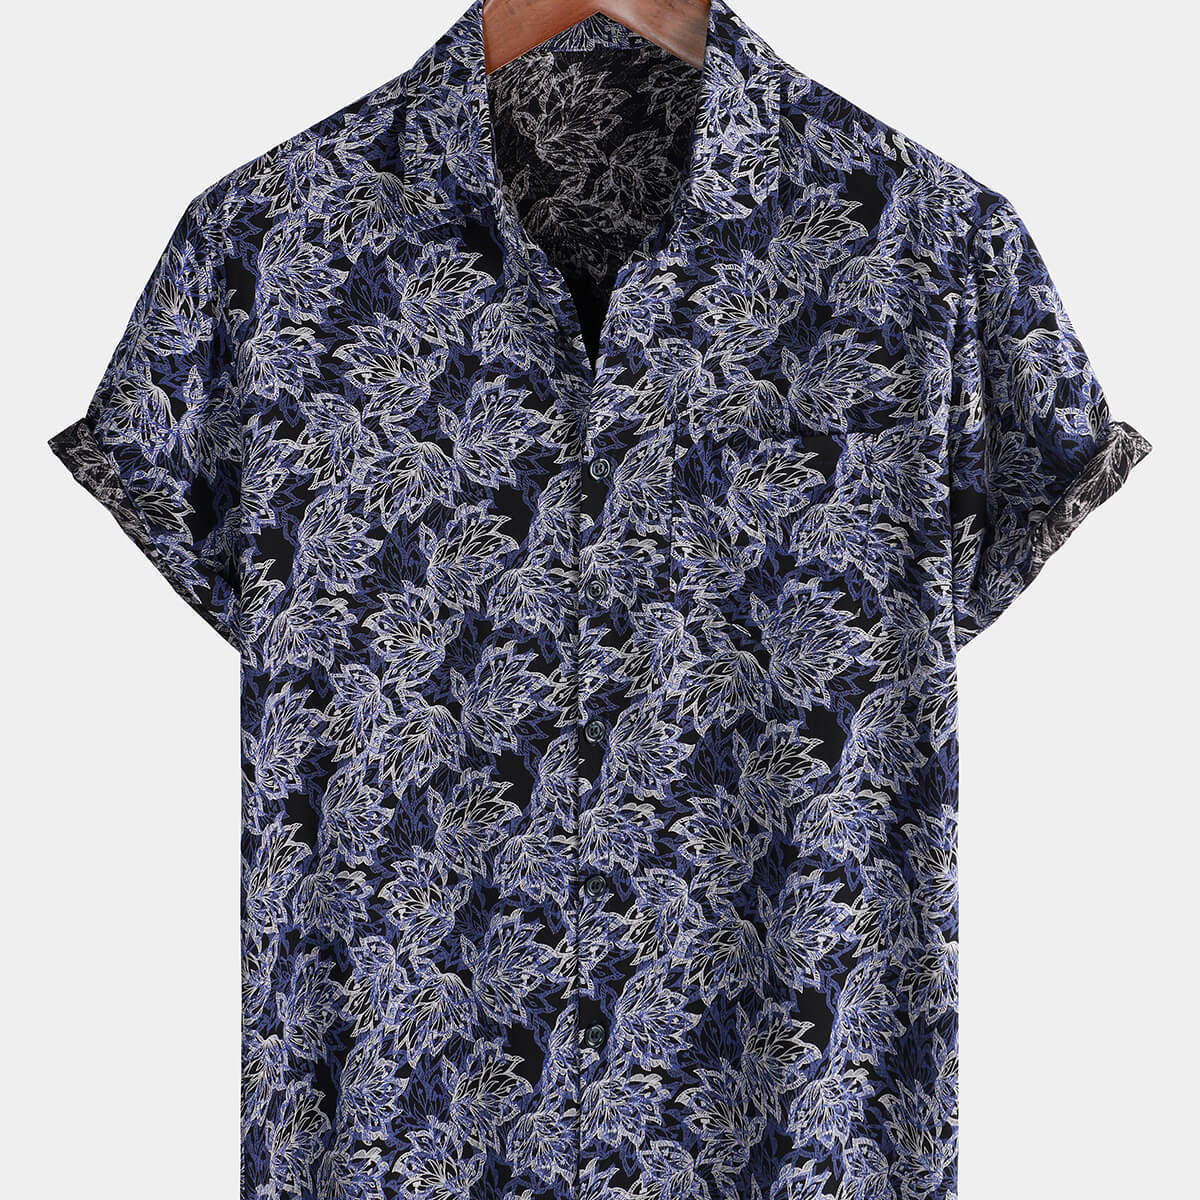 Men's Retro Floral Rayon Pocket Button Up Short Sleeve Shirt